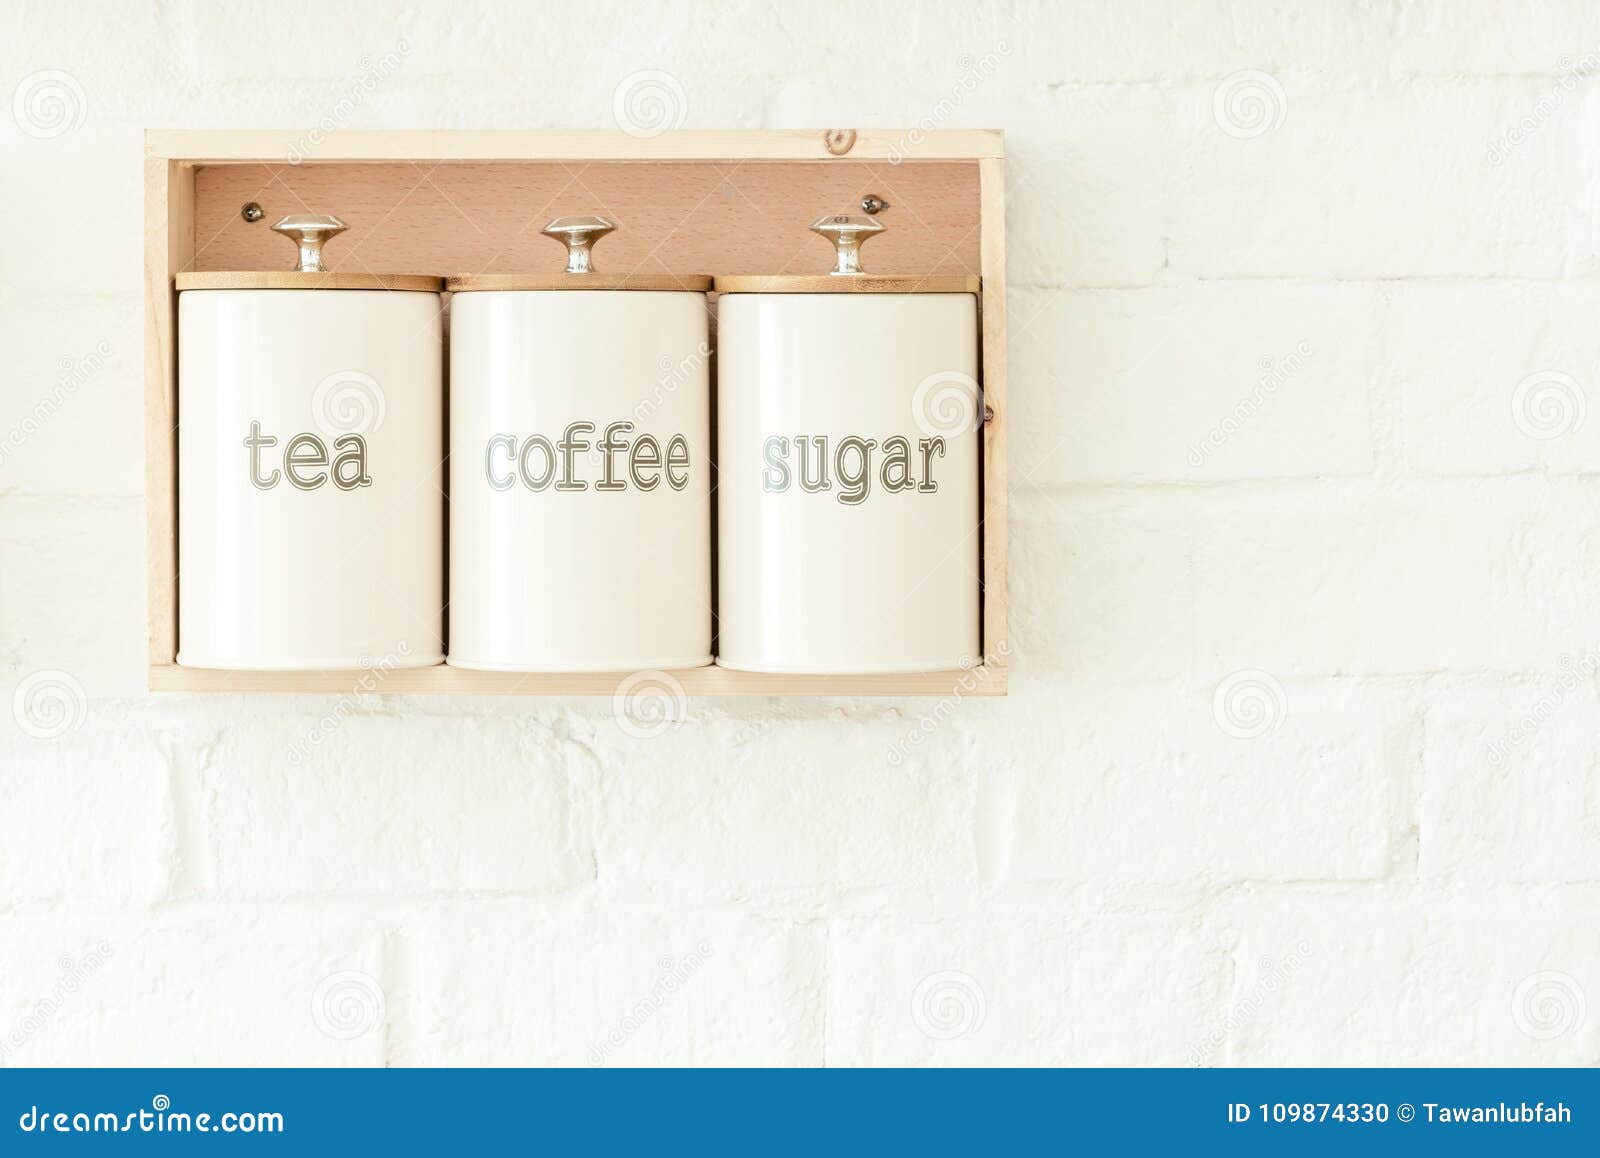 wall mounted tea coffee sugar